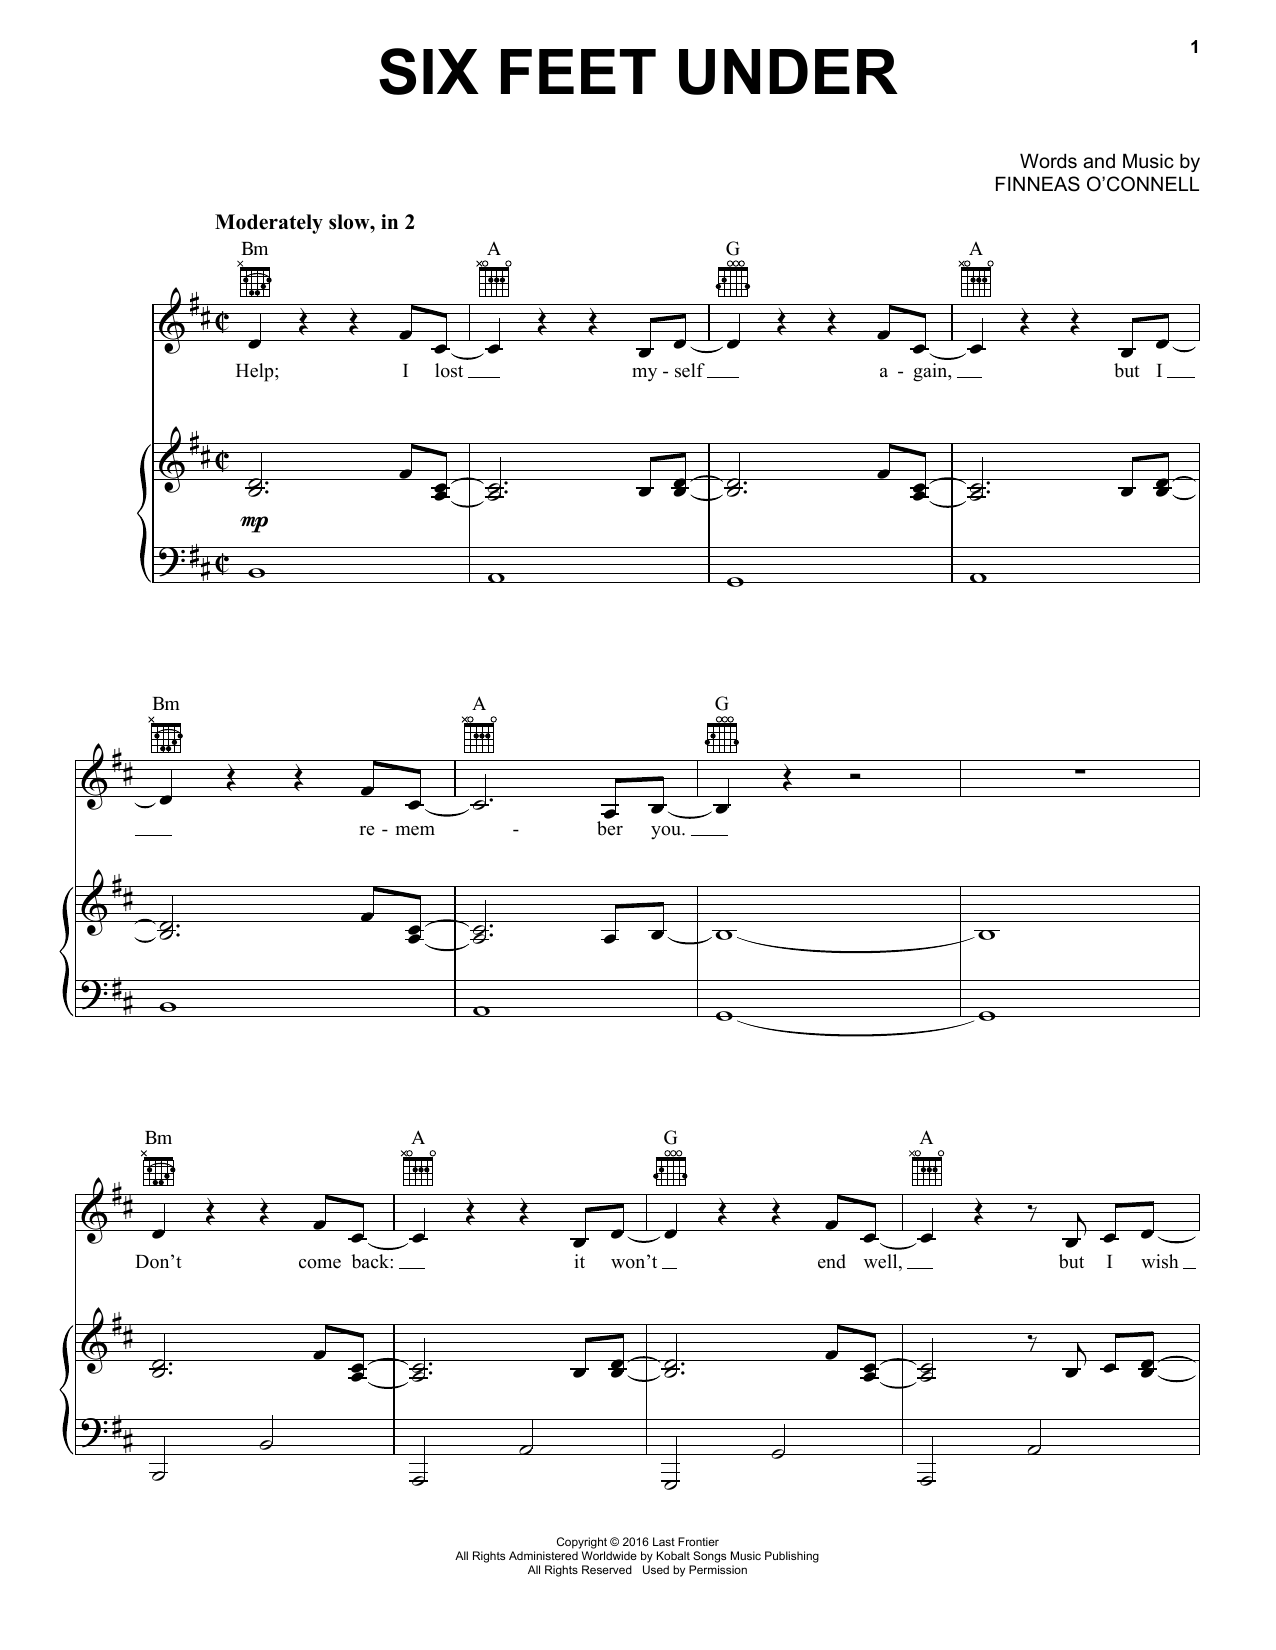 Billie Eilish Six Feet Under Sheet Music Notes & Chords for Ukulele - Download or Print PDF